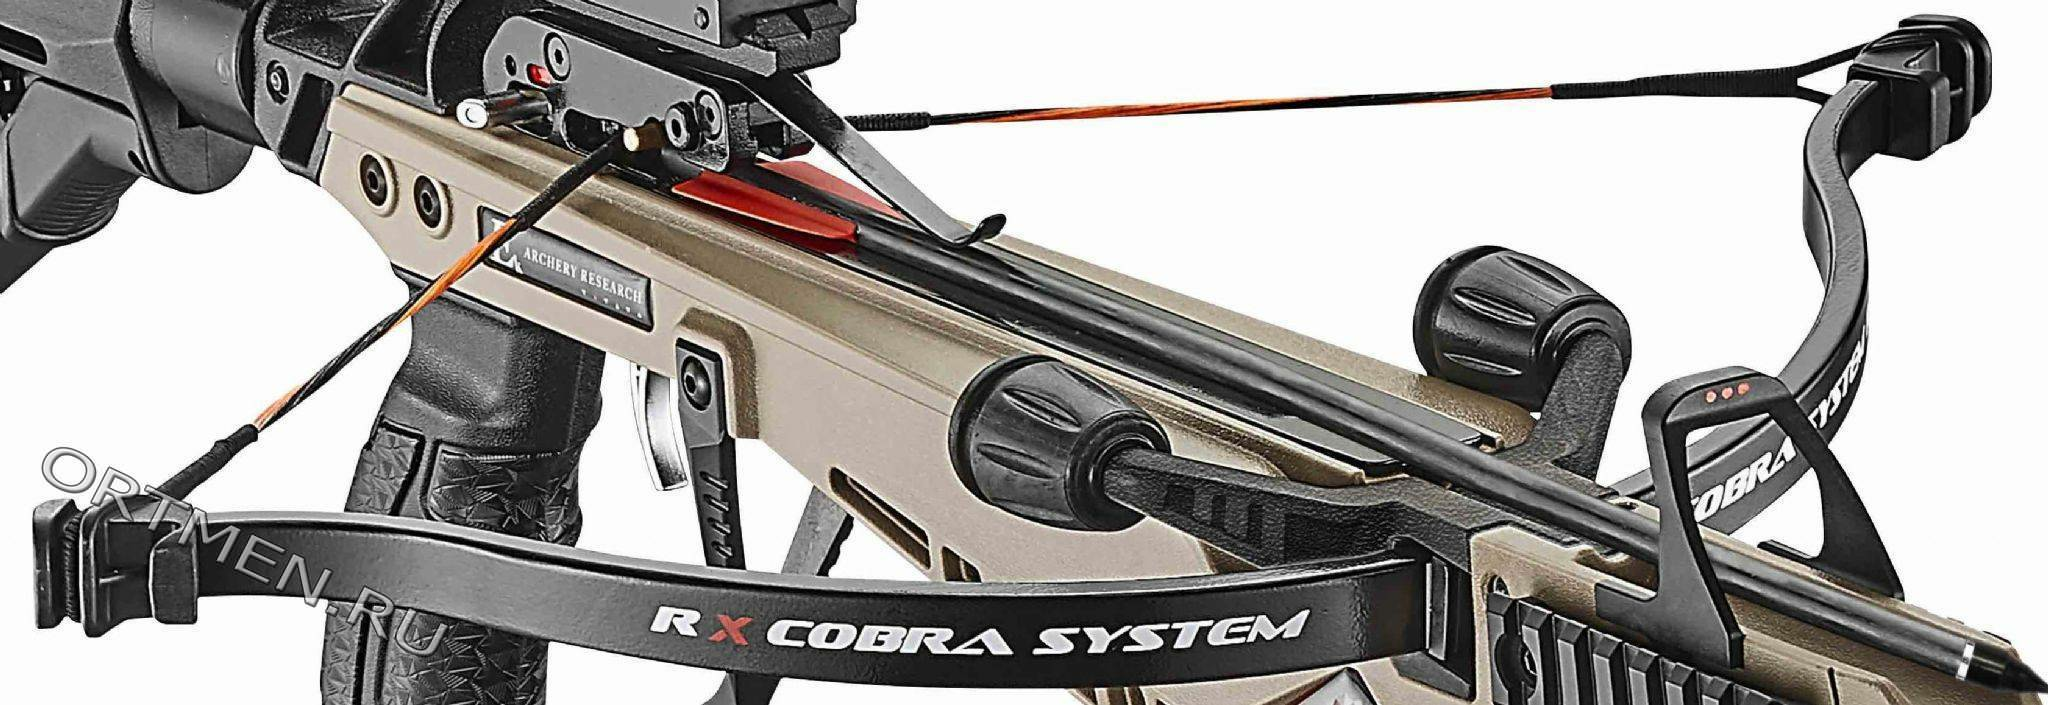 Ek cobra r9. Ek Cobra System r9. Ek Archery Cobra RX 130. Плечи для арбалета Ek Cobra System r9 130 lbs. Плечи Ek Cobra System r9 (RX).